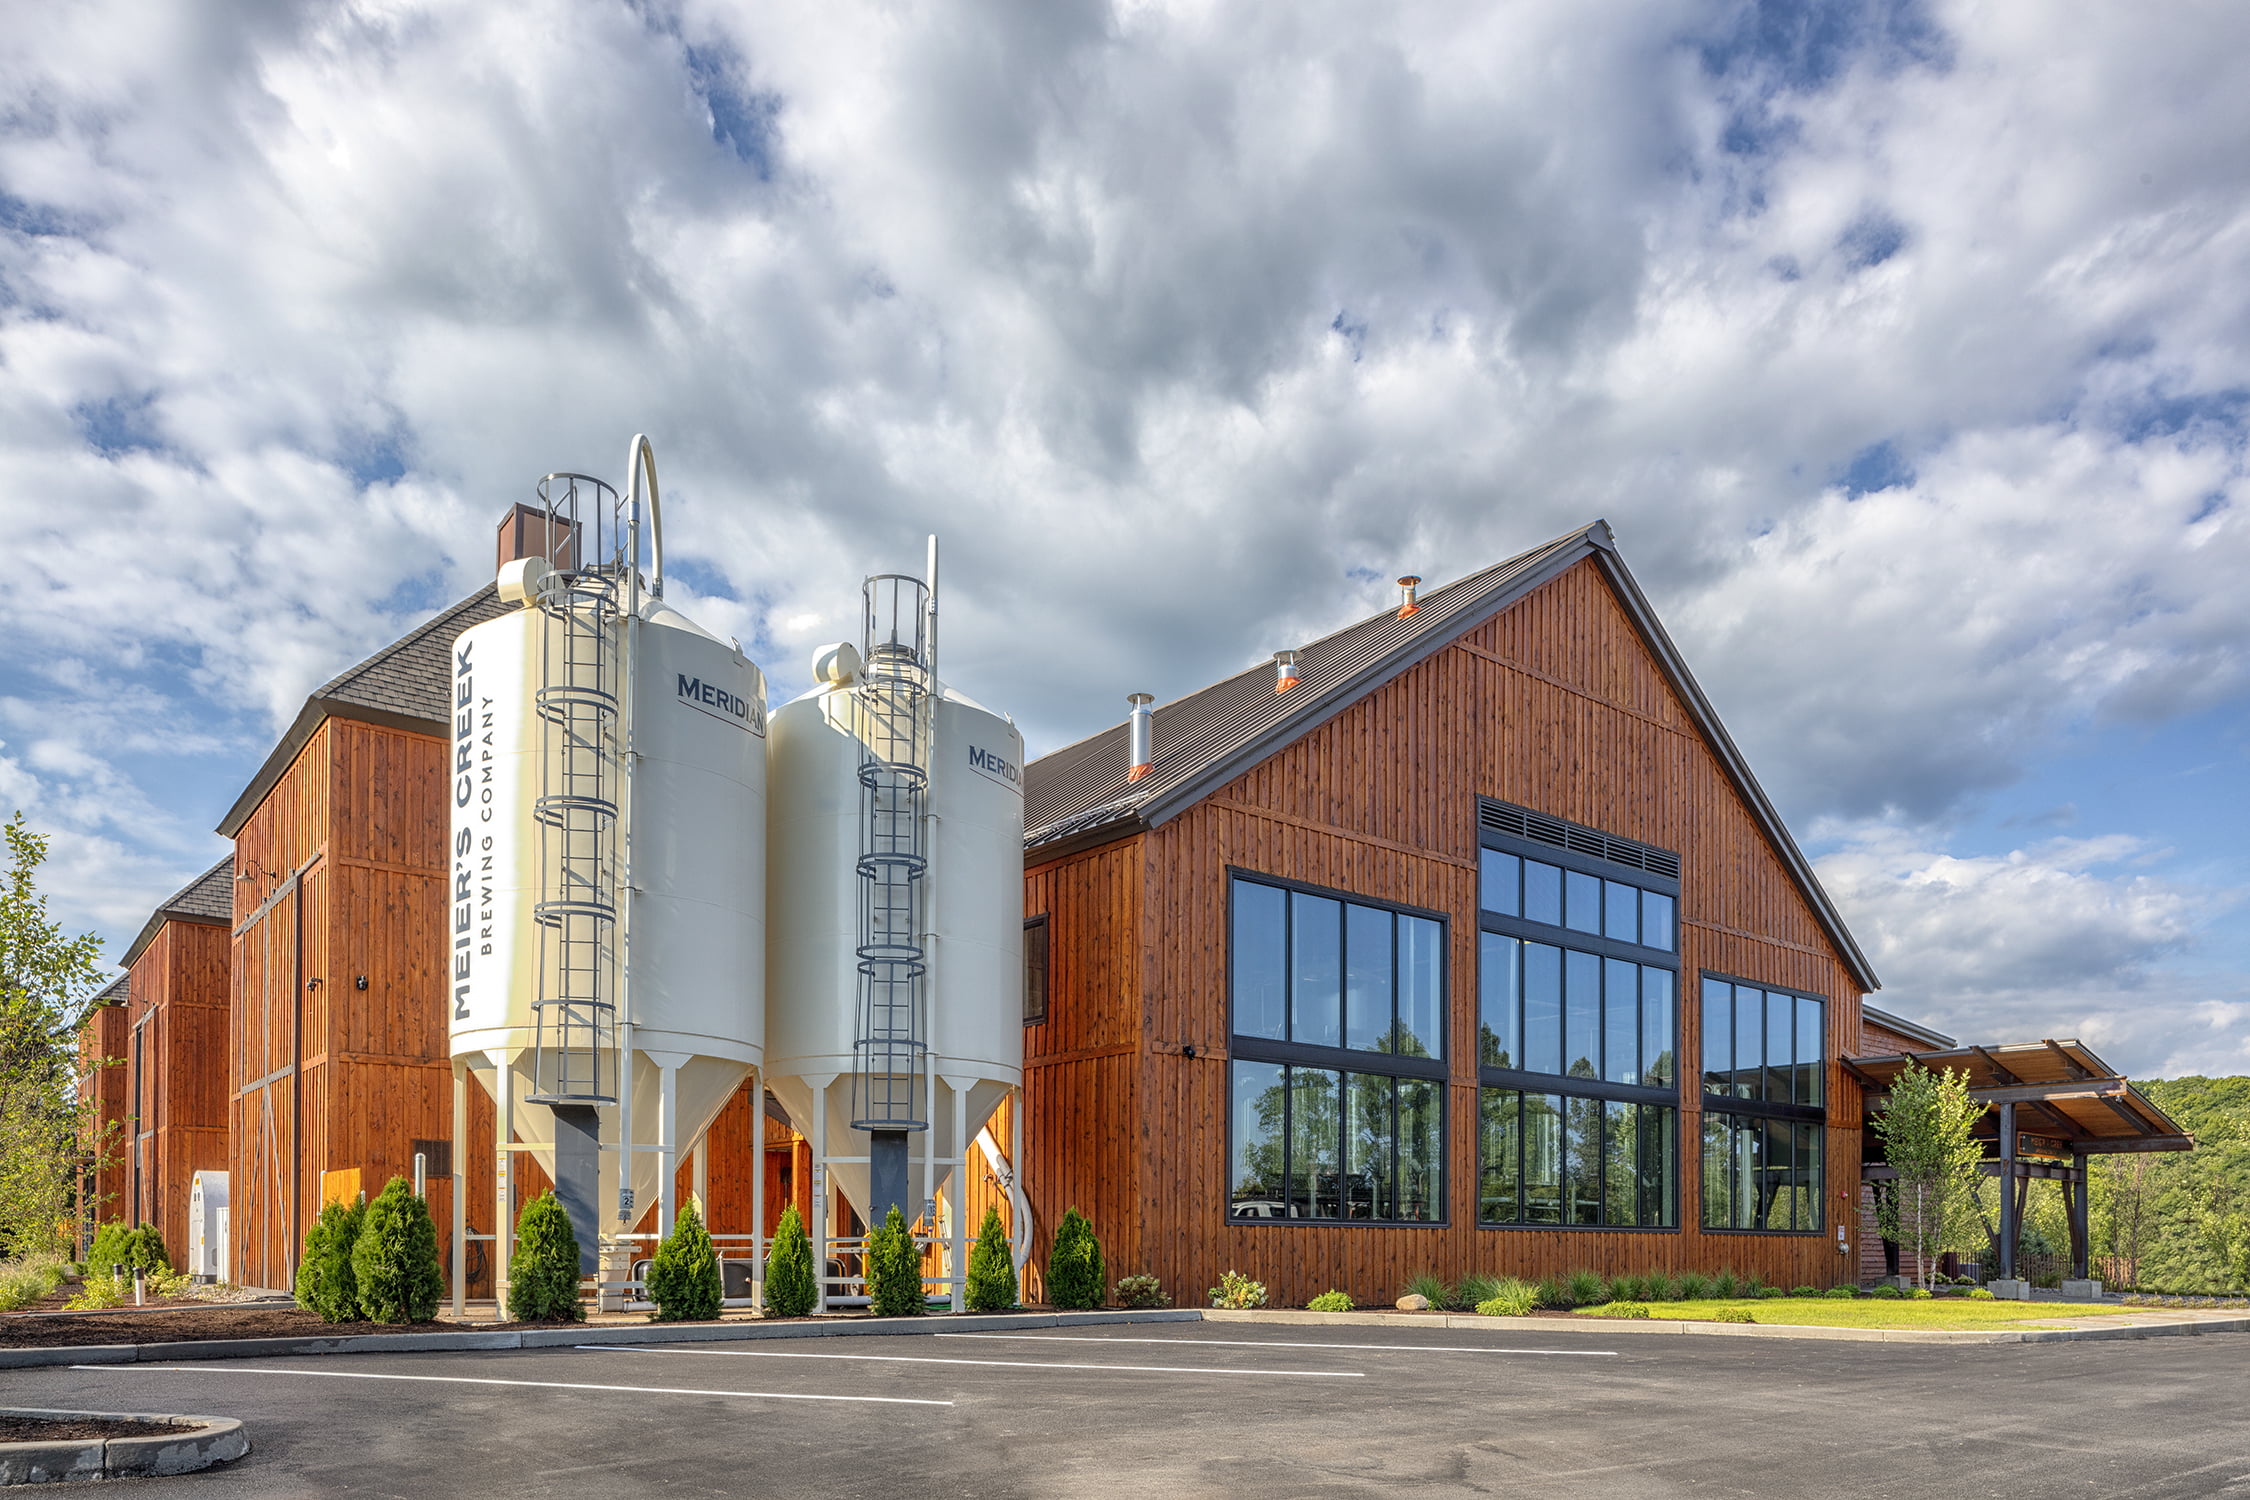 Meier’s Creek Brewing Company is open for business!